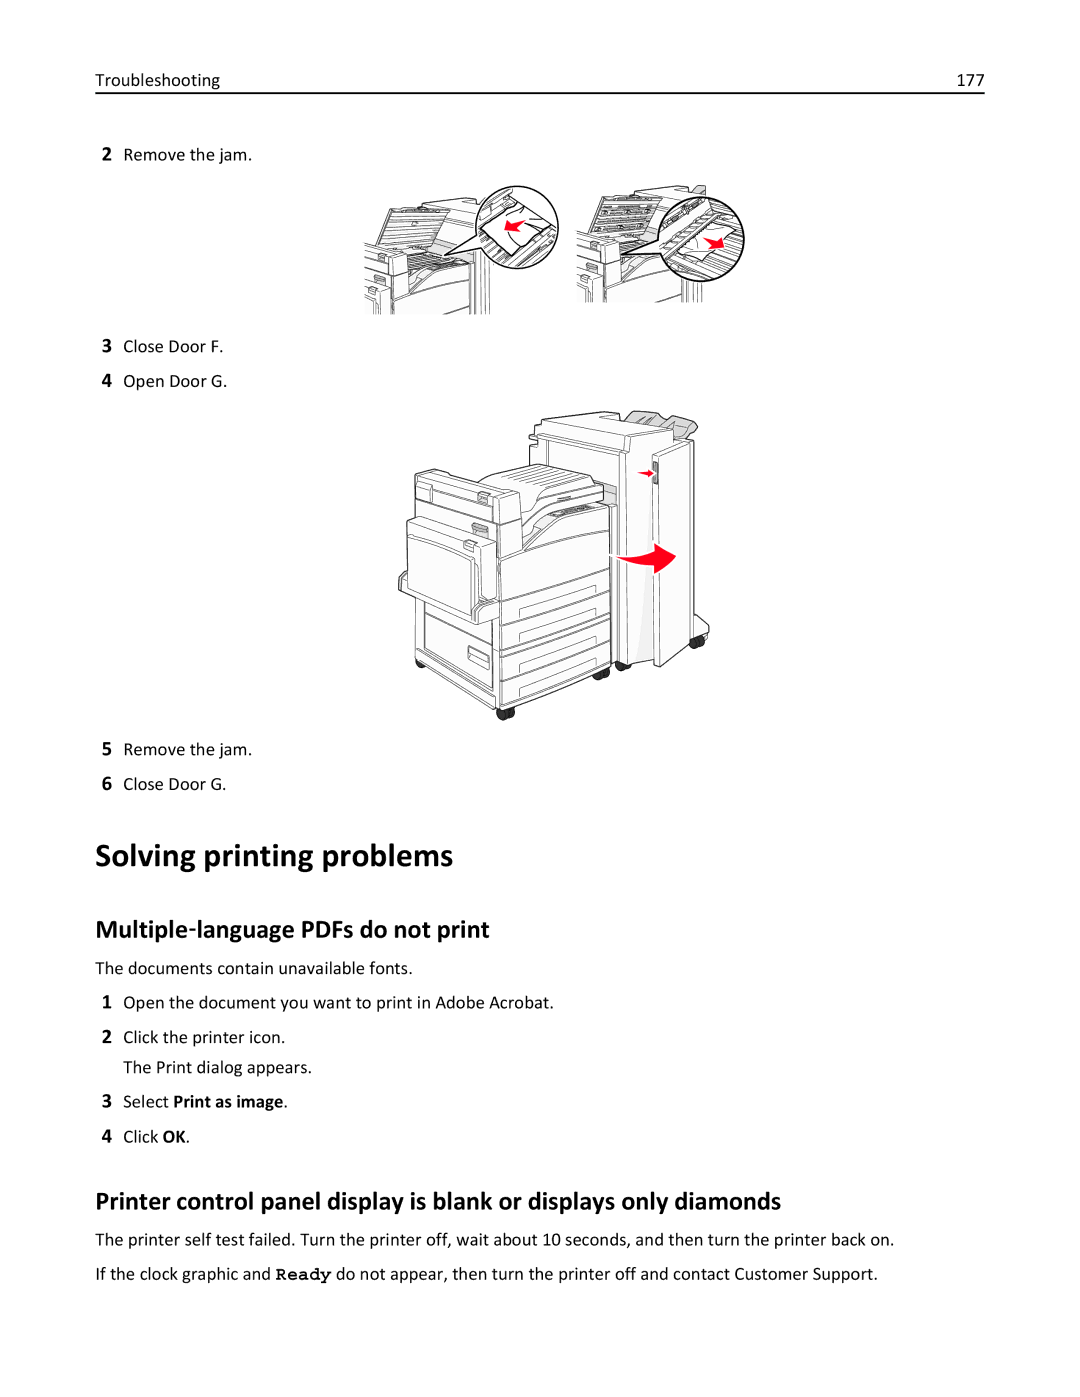 Lexmark W850 manual Solving printing problems, Click OK 